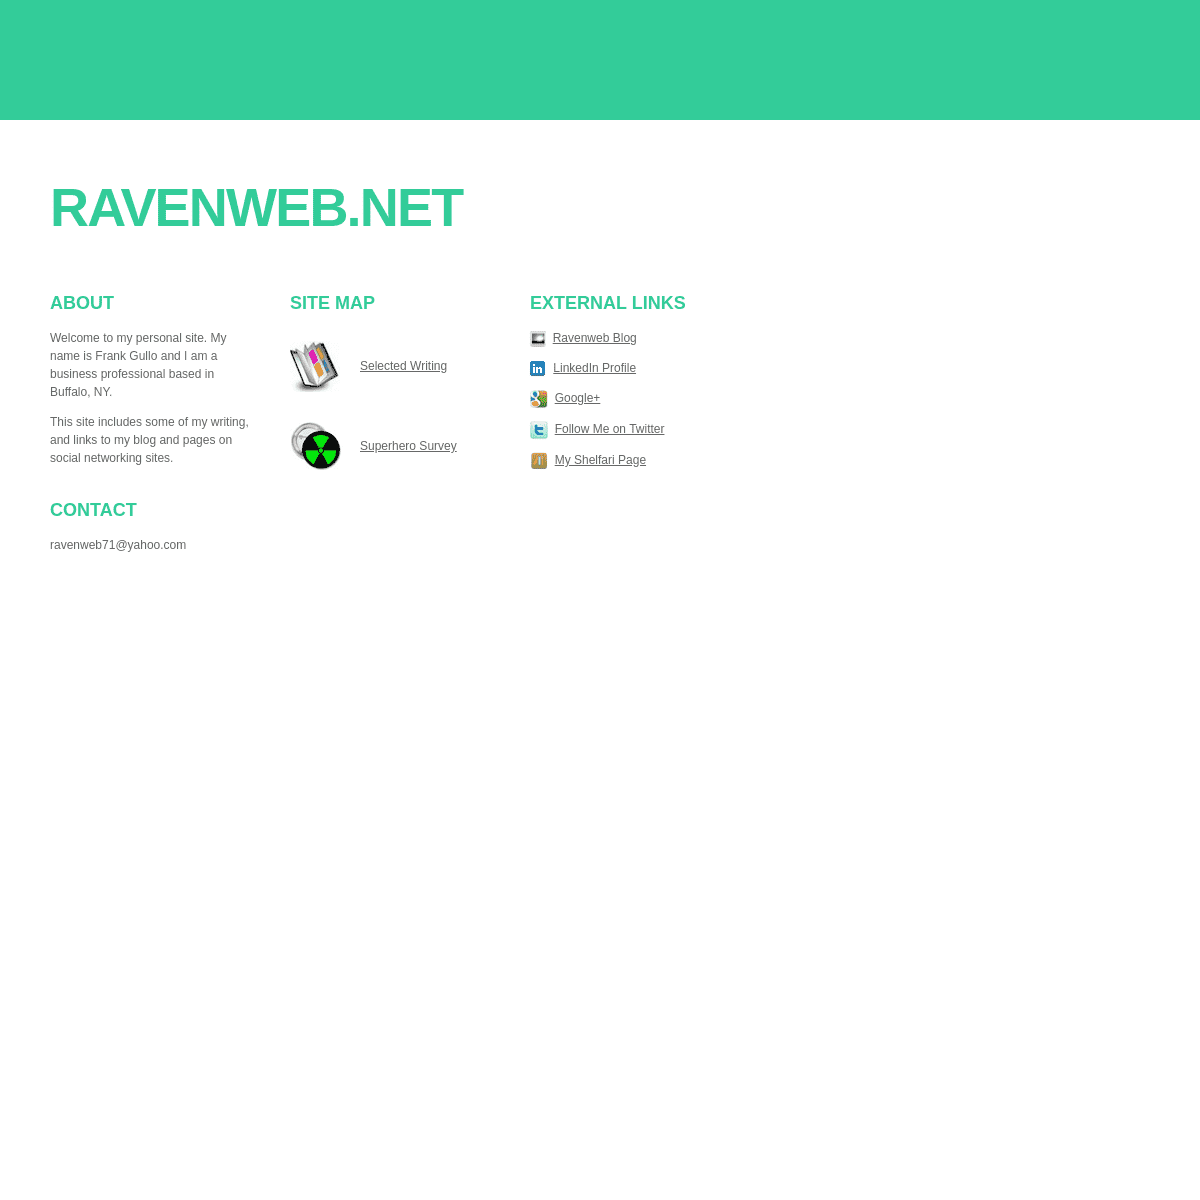 A complete backup of ravenweb.net